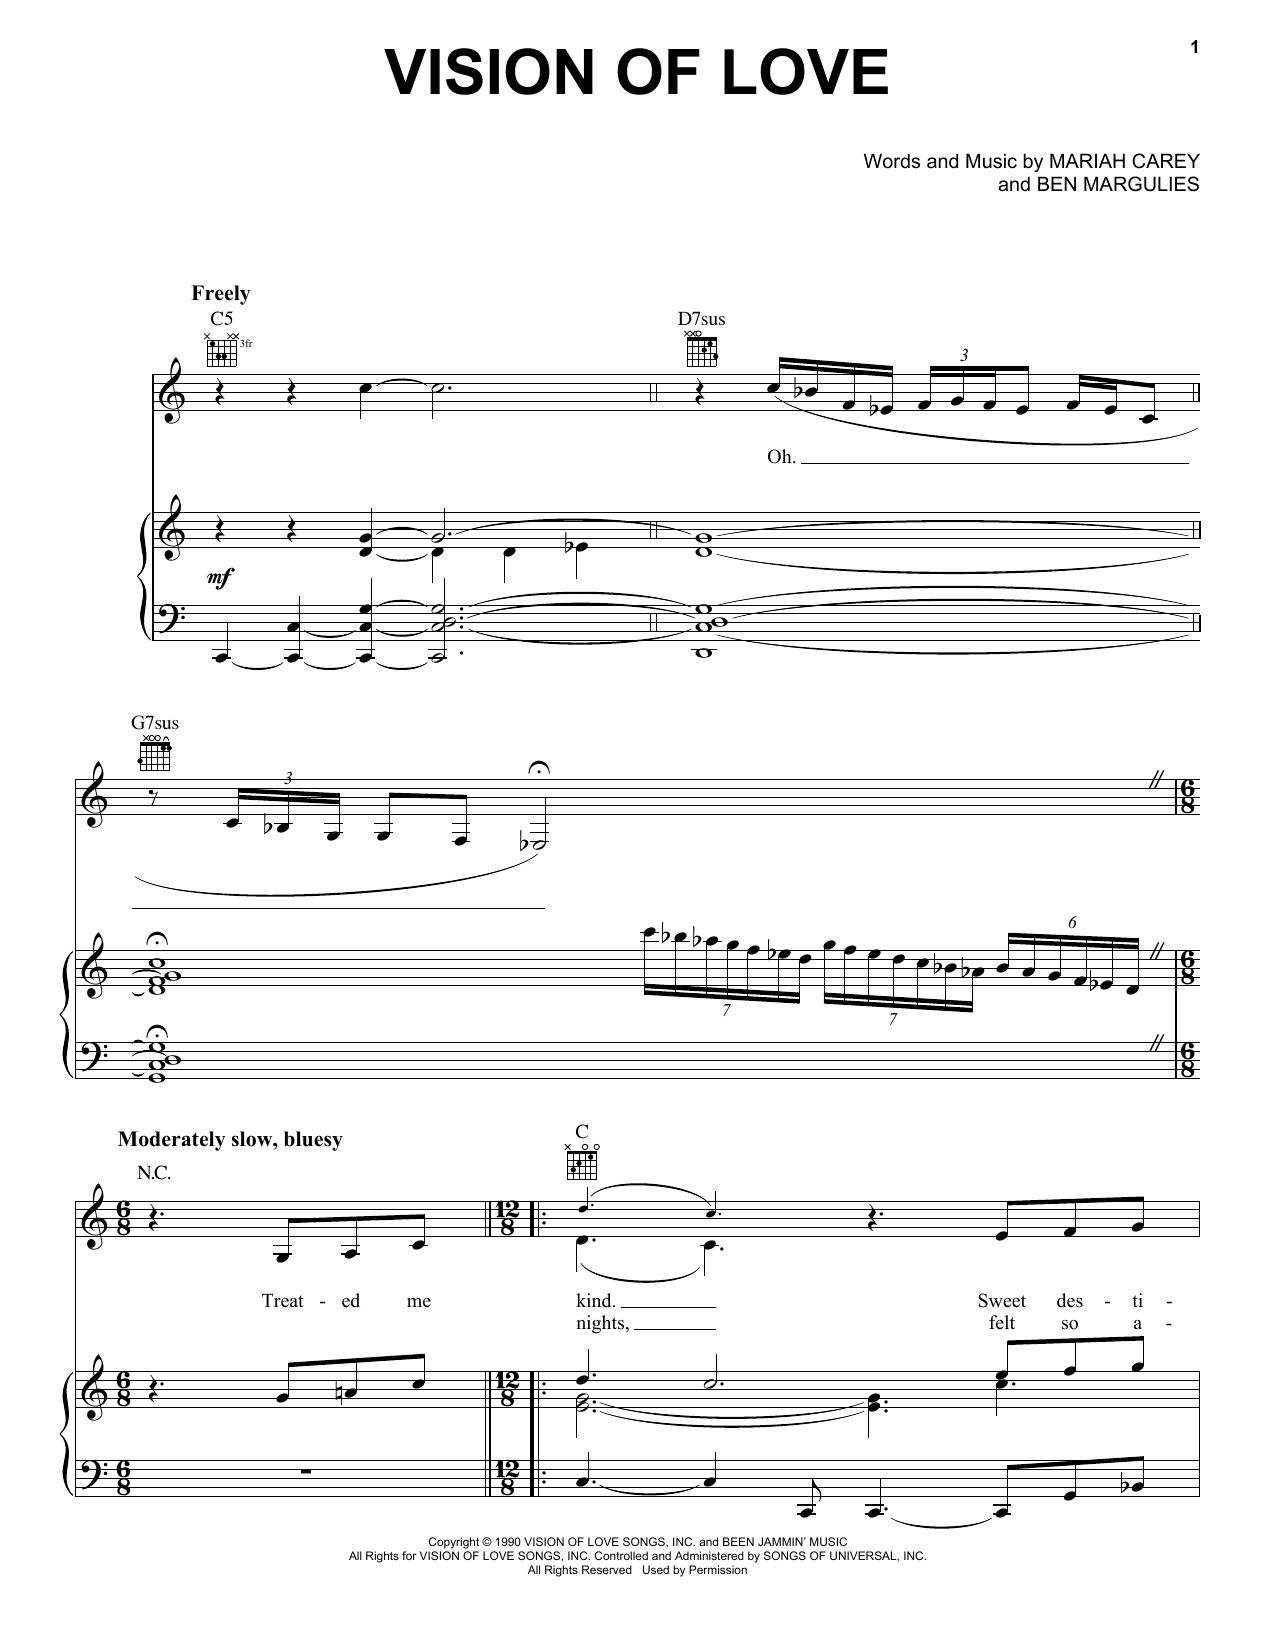 Mariah Carey Vision Of Love Sheet Music Notes & Chords for Lead Sheet / Fake Book - Download or Print PDF